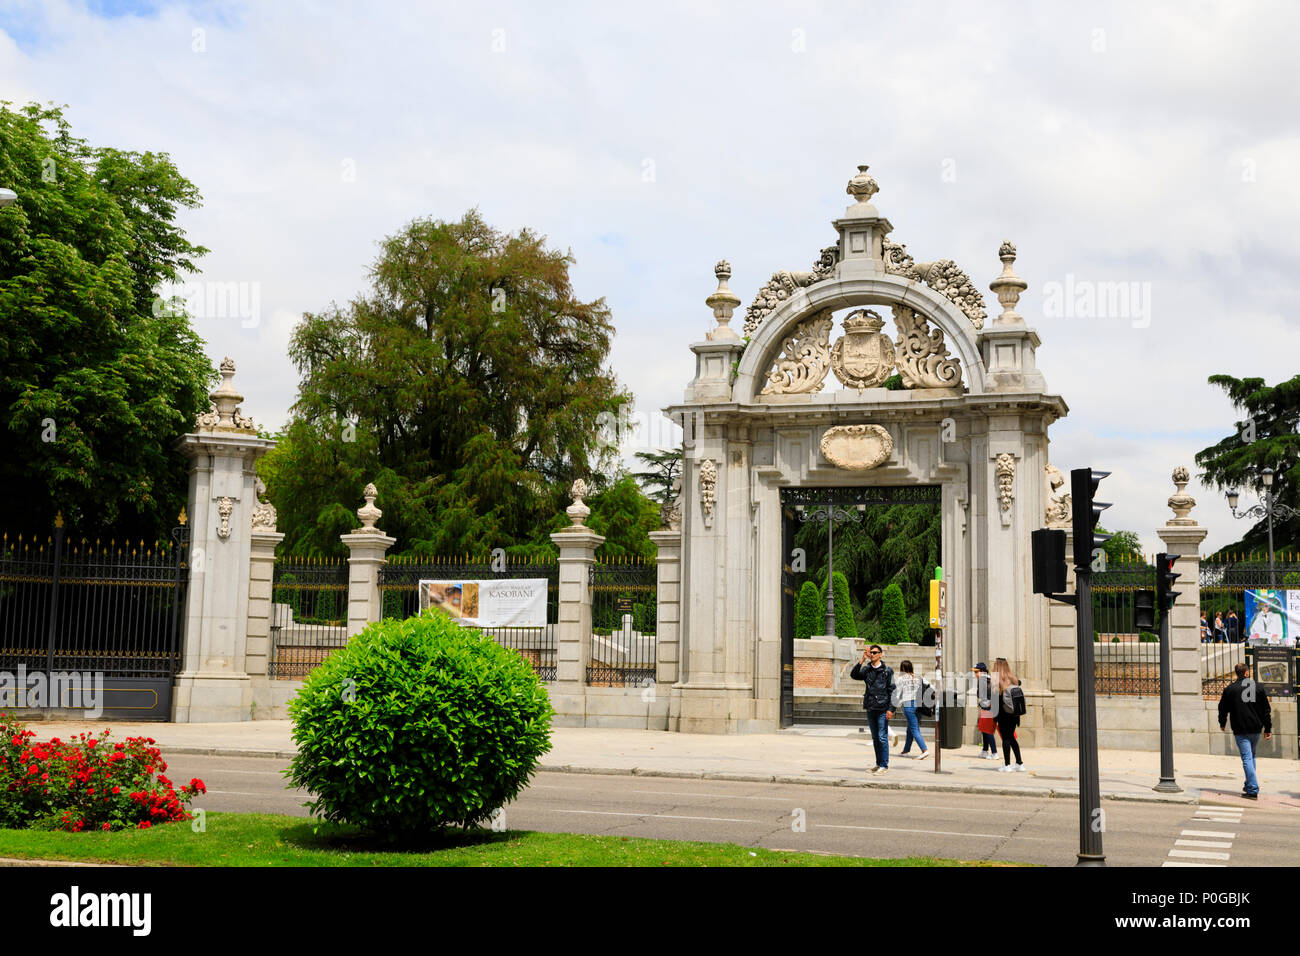 Puerto Felipe IV cancello di ingresso al Parque del Buen Retiro, Parque de Madrid, Madrid, Spagna. Maggio 2018 Foto Stock